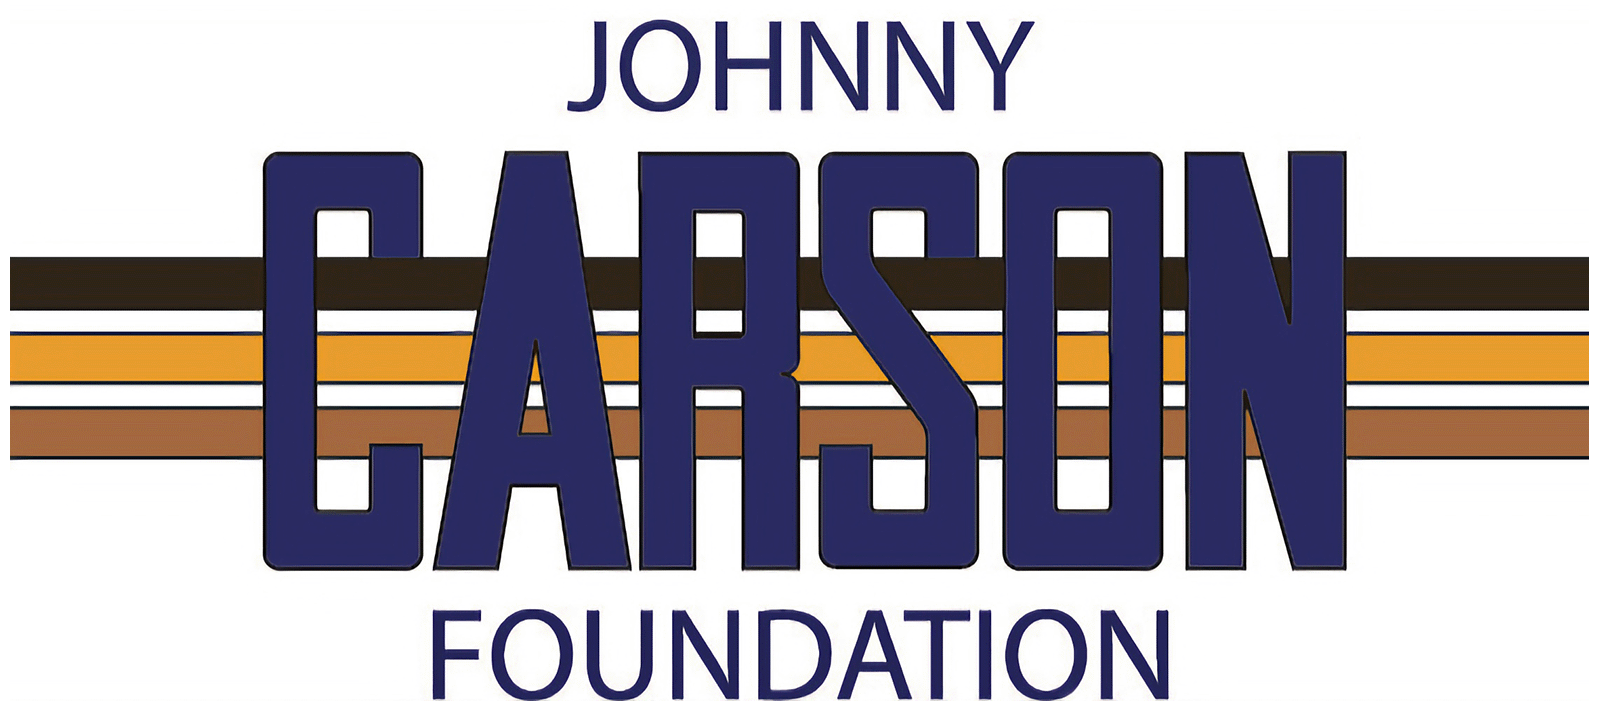 Johnny Carson Foundation Sponsor for George Lopez Celebrity Golf Classic